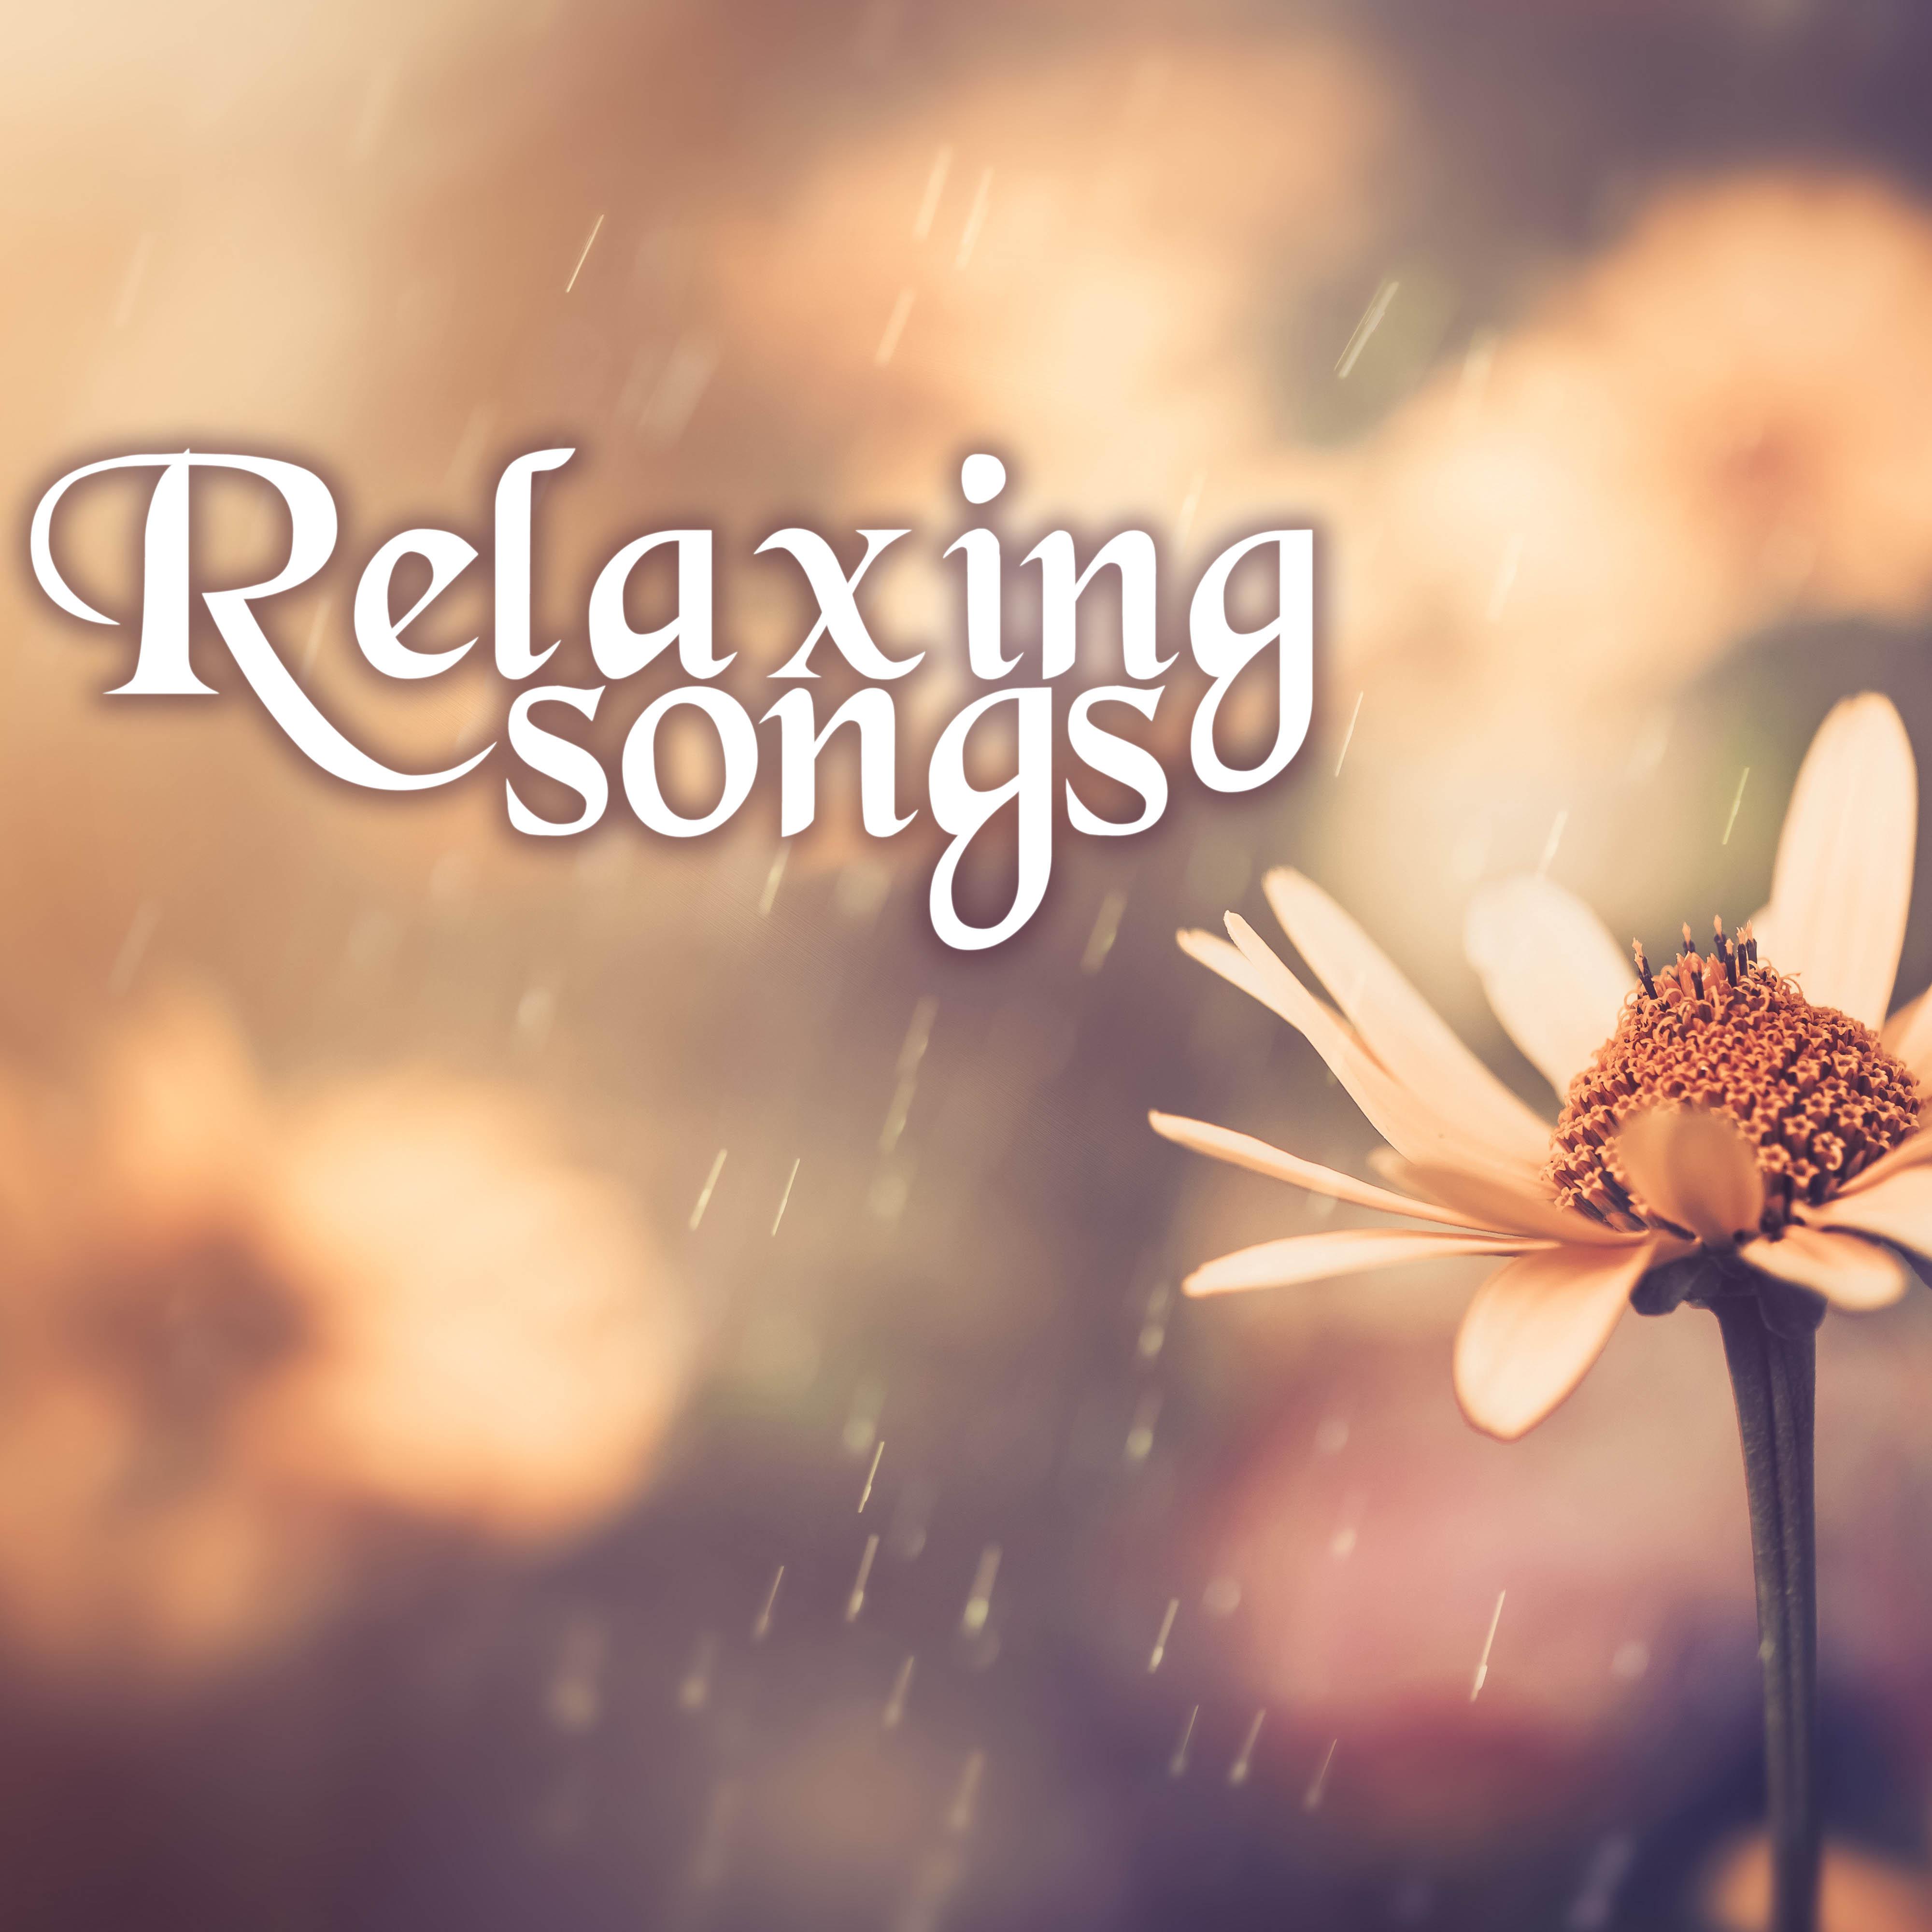 Relaxing Songs to Help You Sleep & Meditate